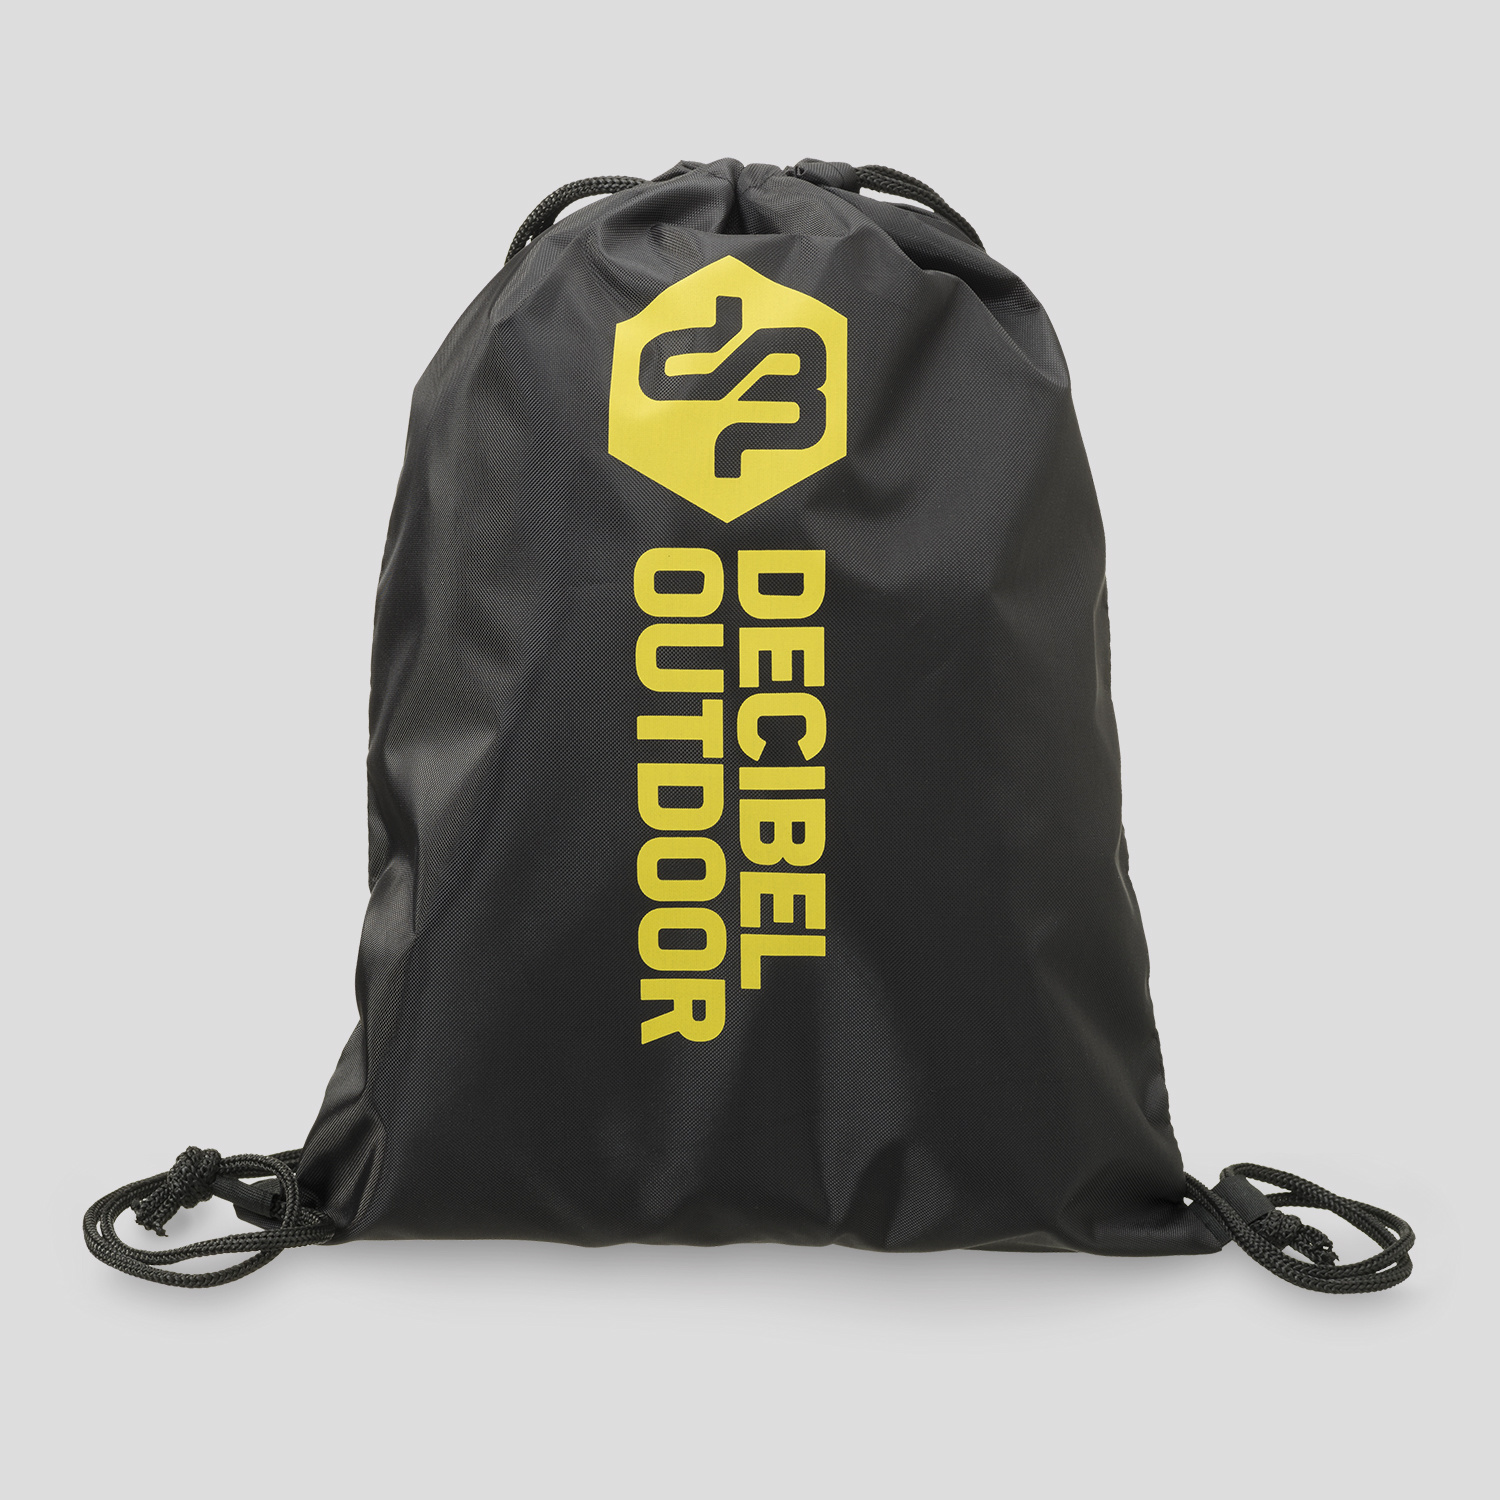 Decibel stringbag black/yellow